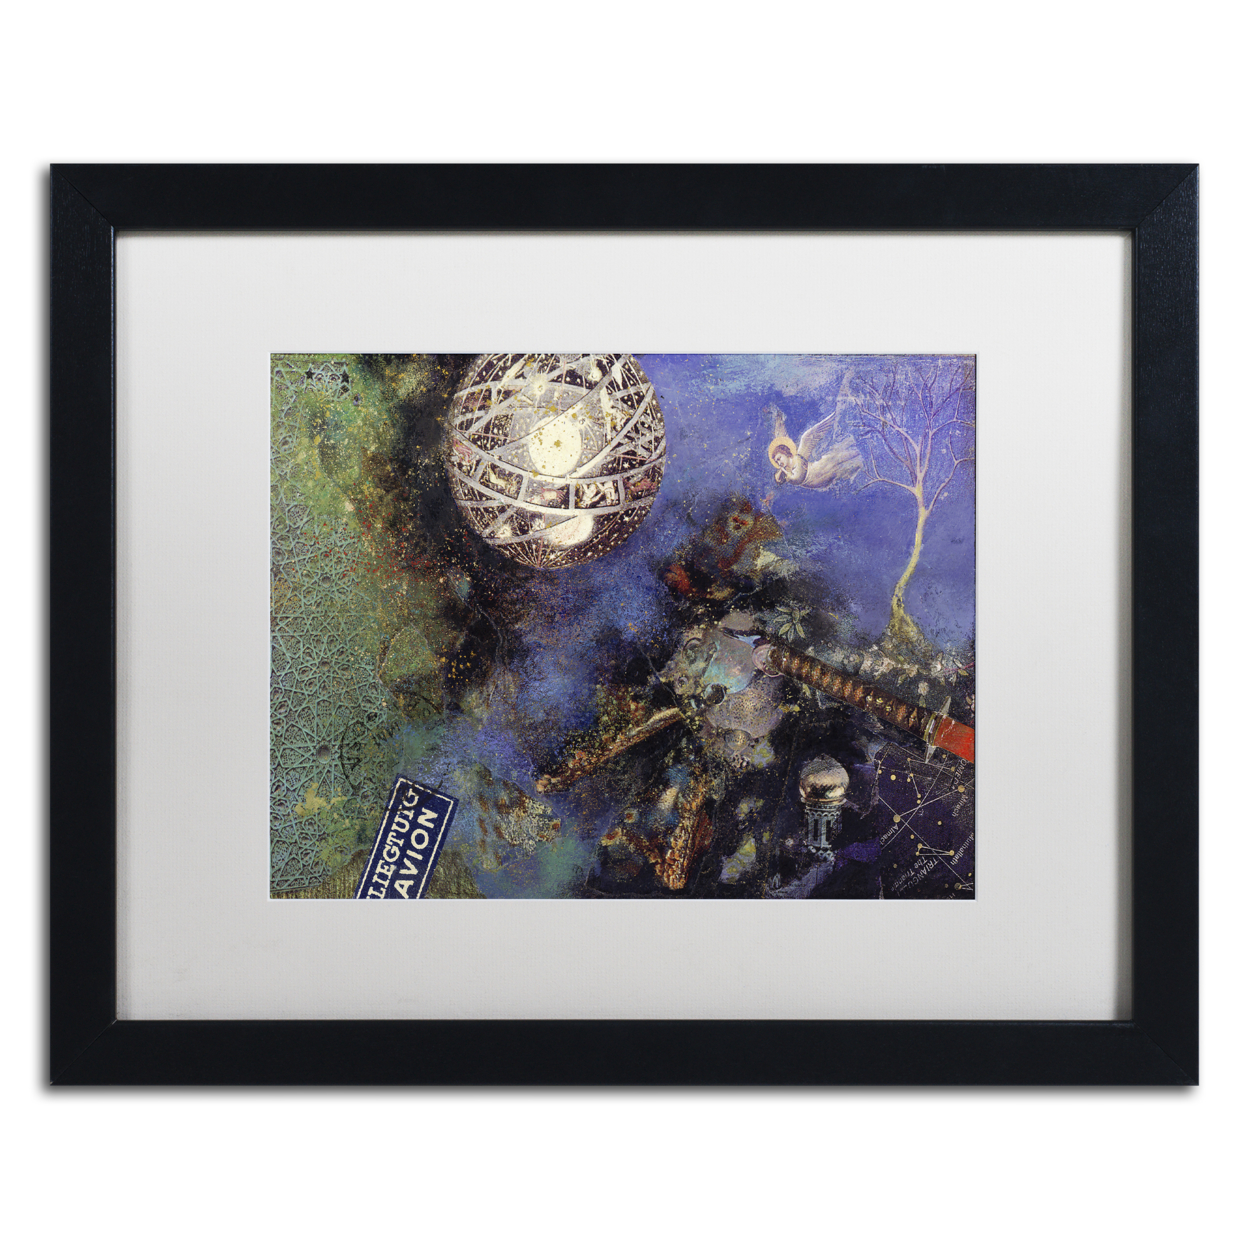 Nick Bantock 'Night Angel' Black Wooden Framed Art 18 X 22 Inches